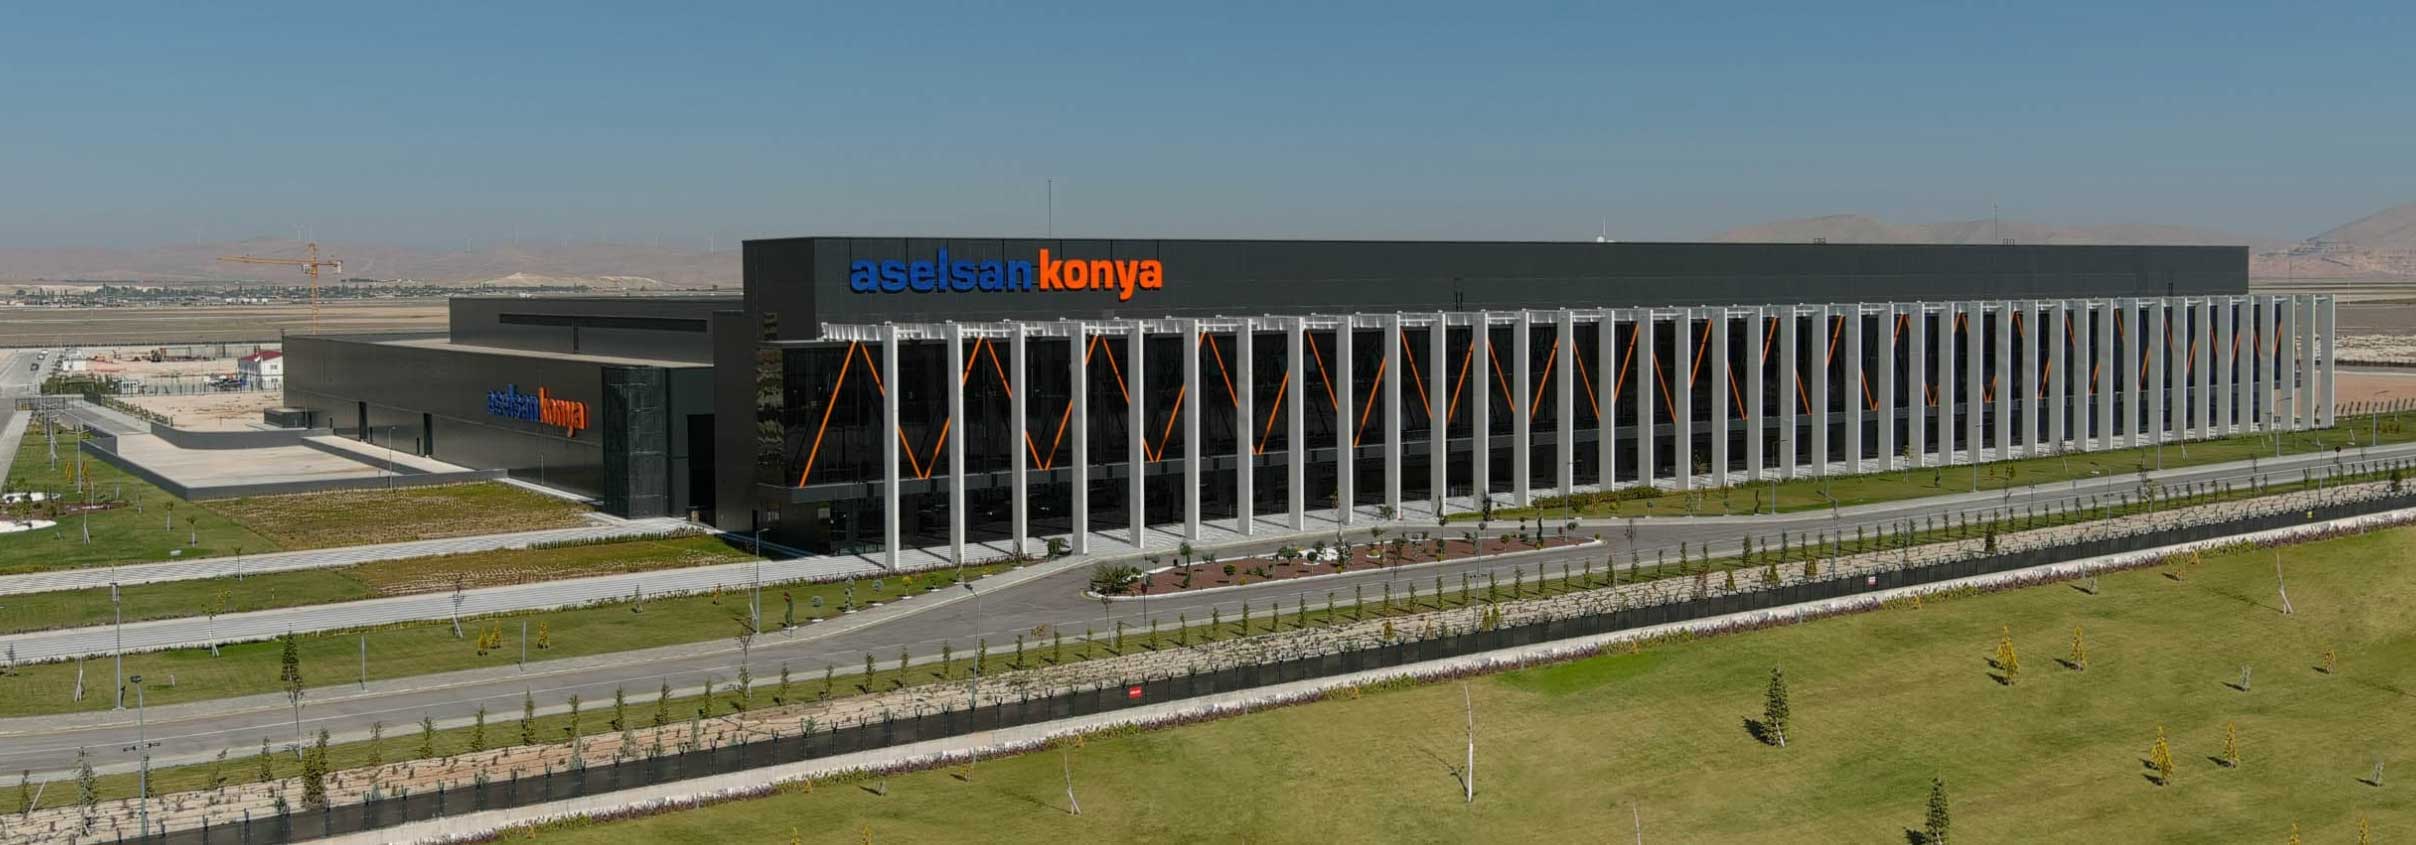 Konya Aselsan Fabrikasi